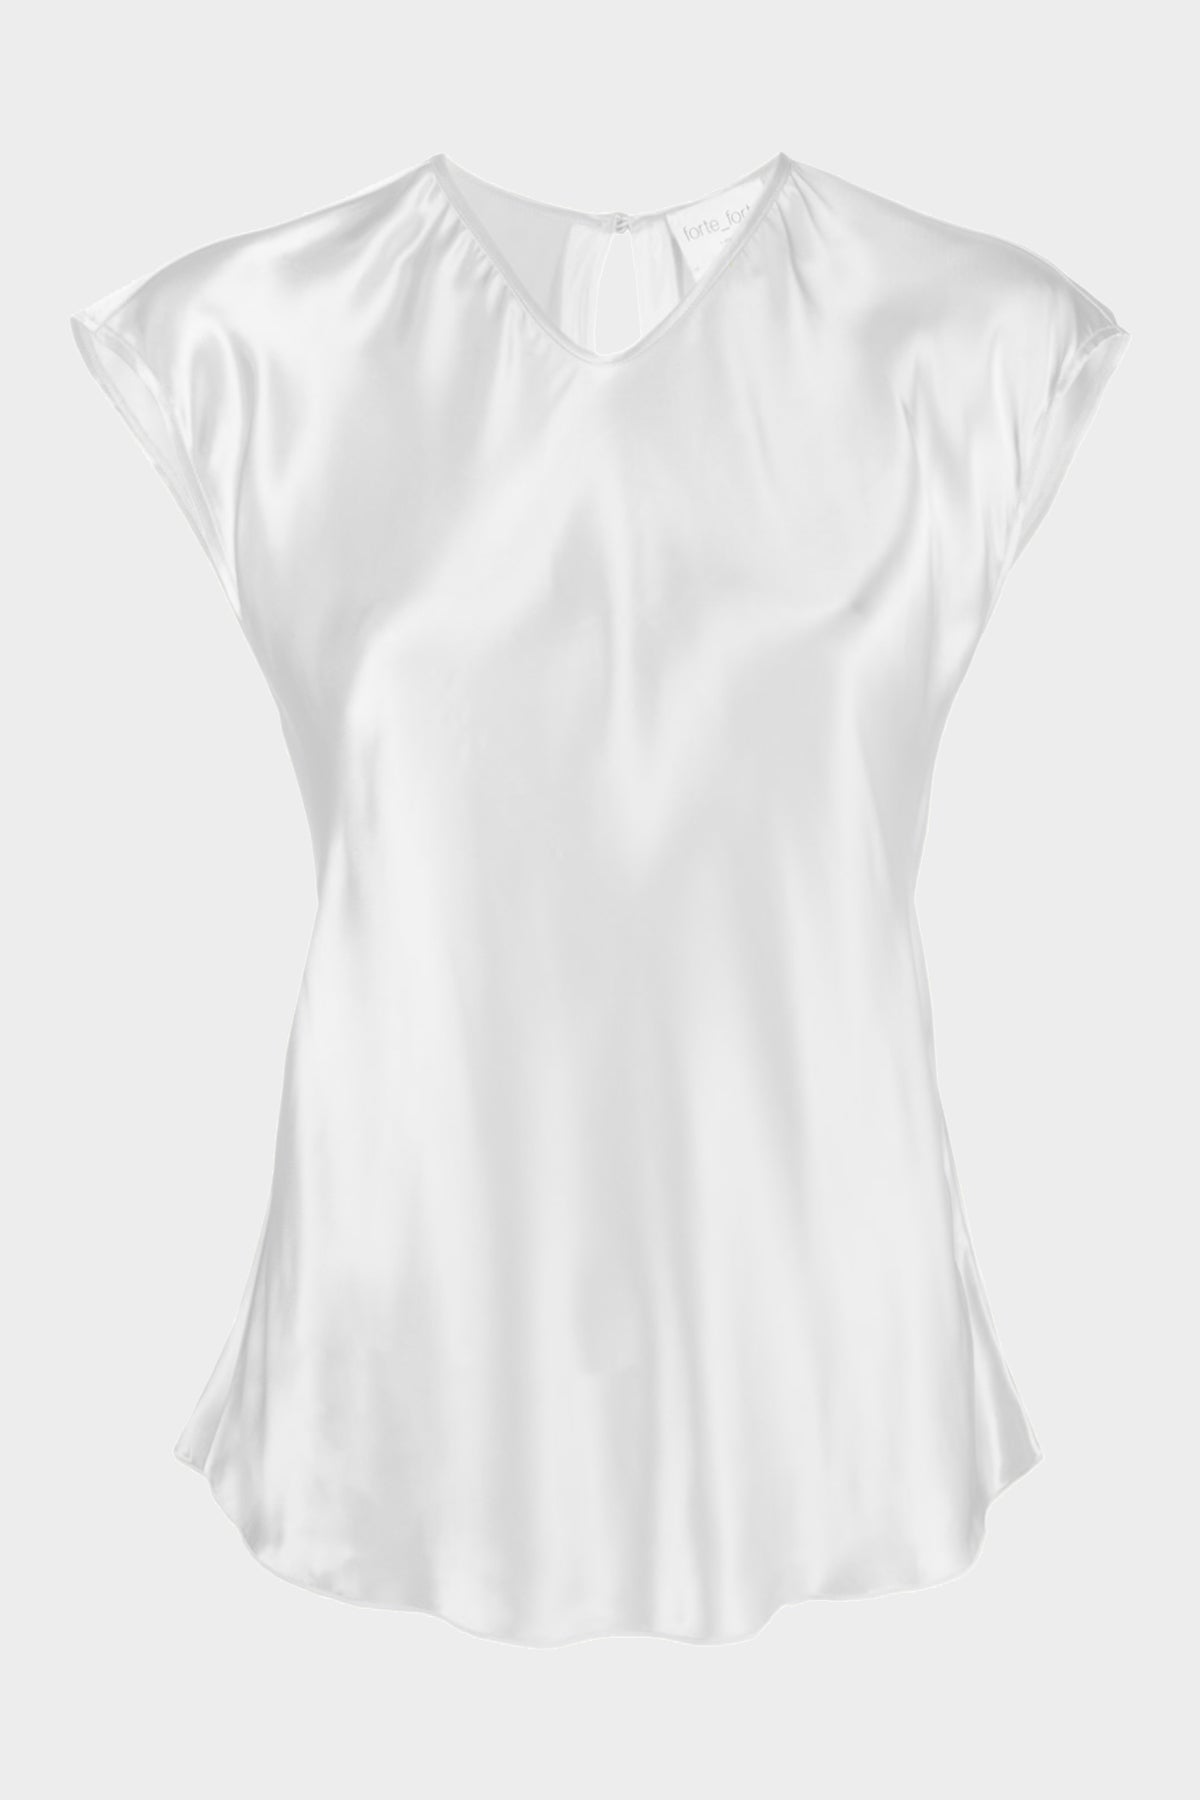 Shining Satin Top in White - shop-olivia.com